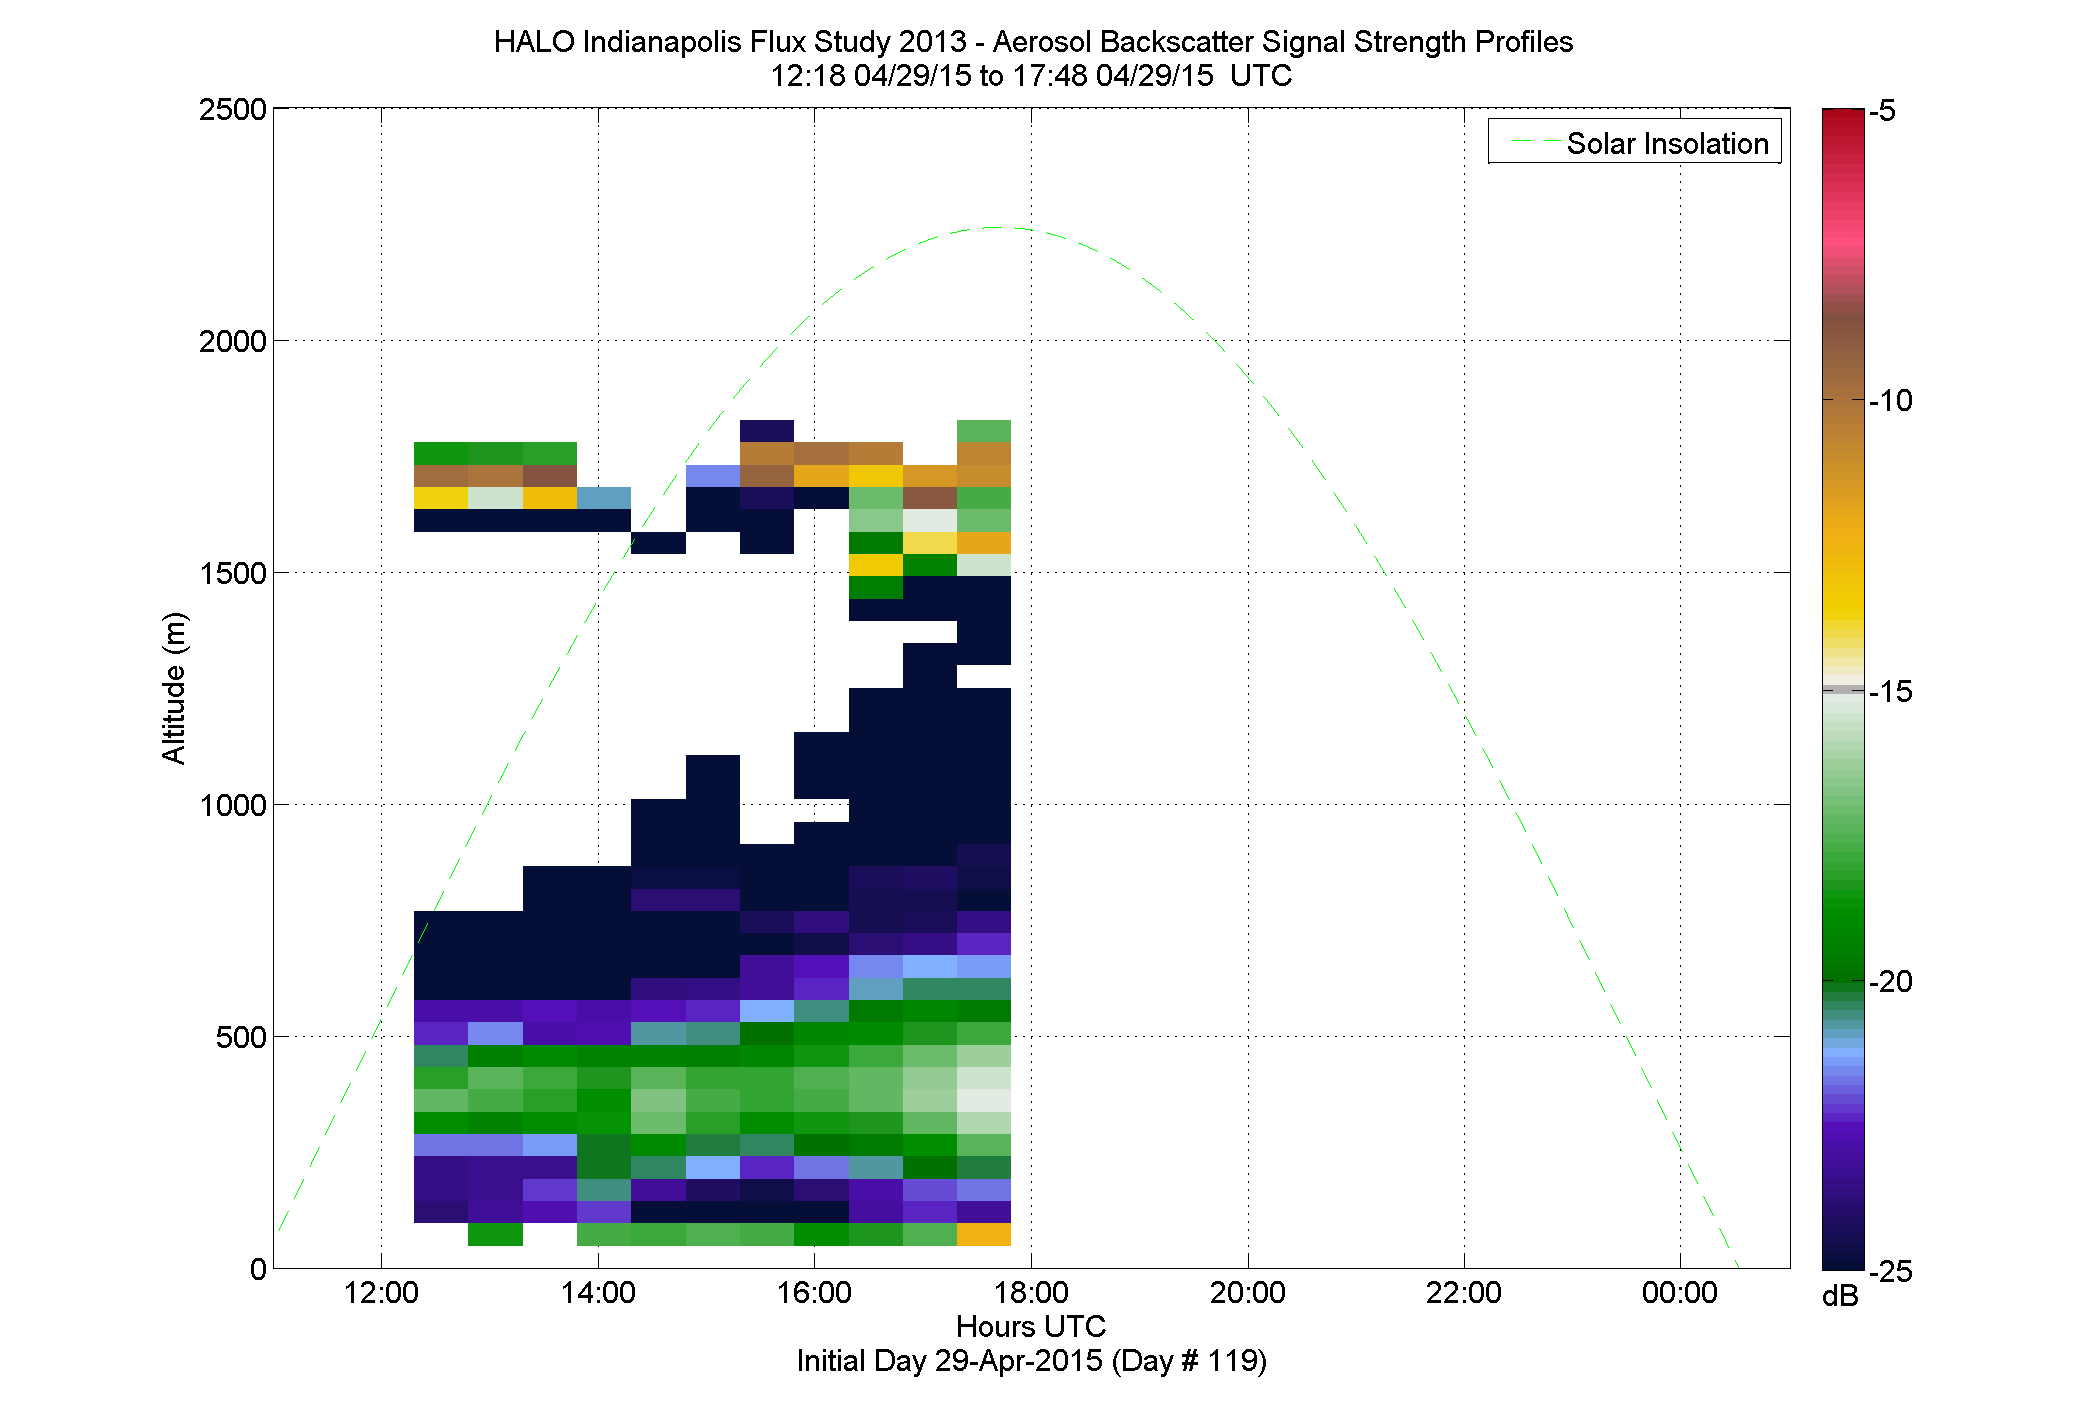 HALO aerosol backscatter signal strength profile - April 29 pm